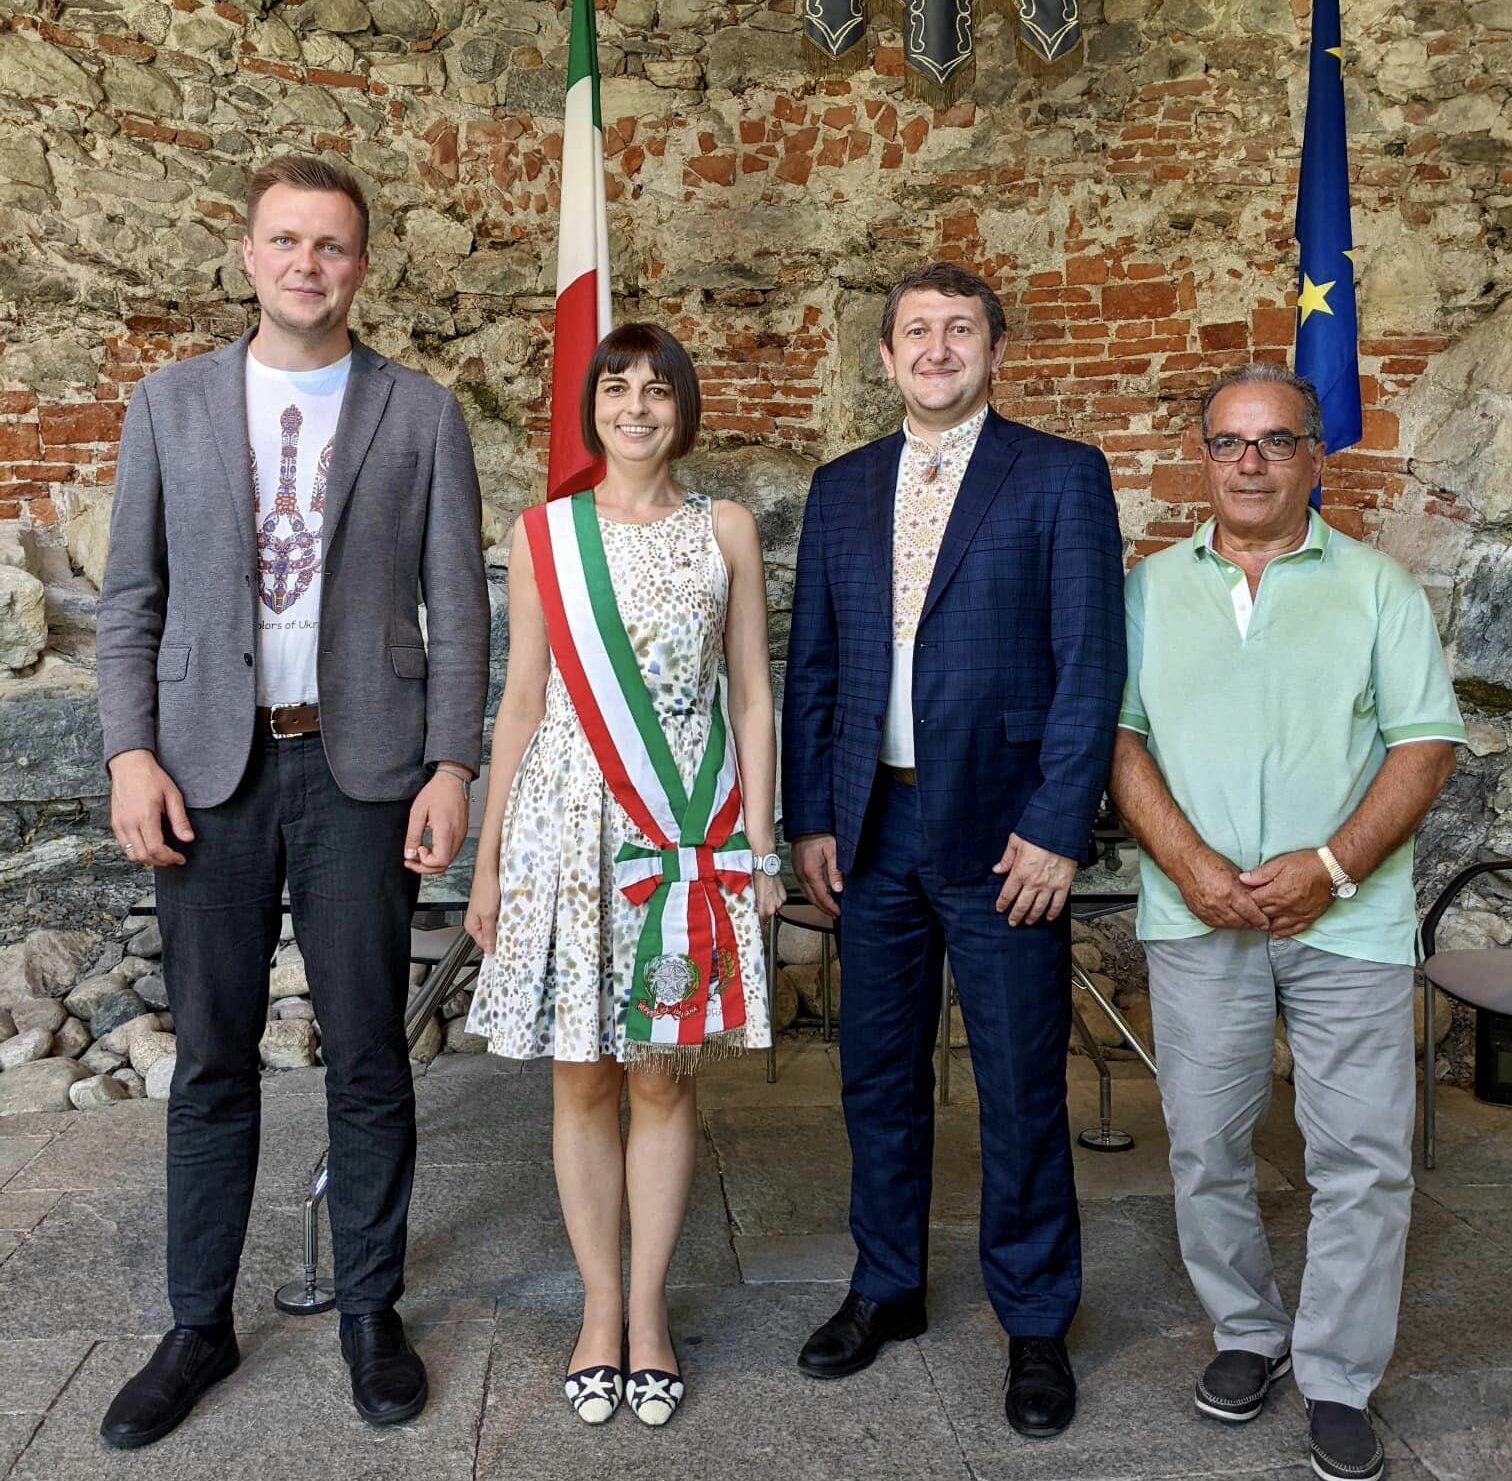 Town mayor meeting the mayor of Ispra, Italy